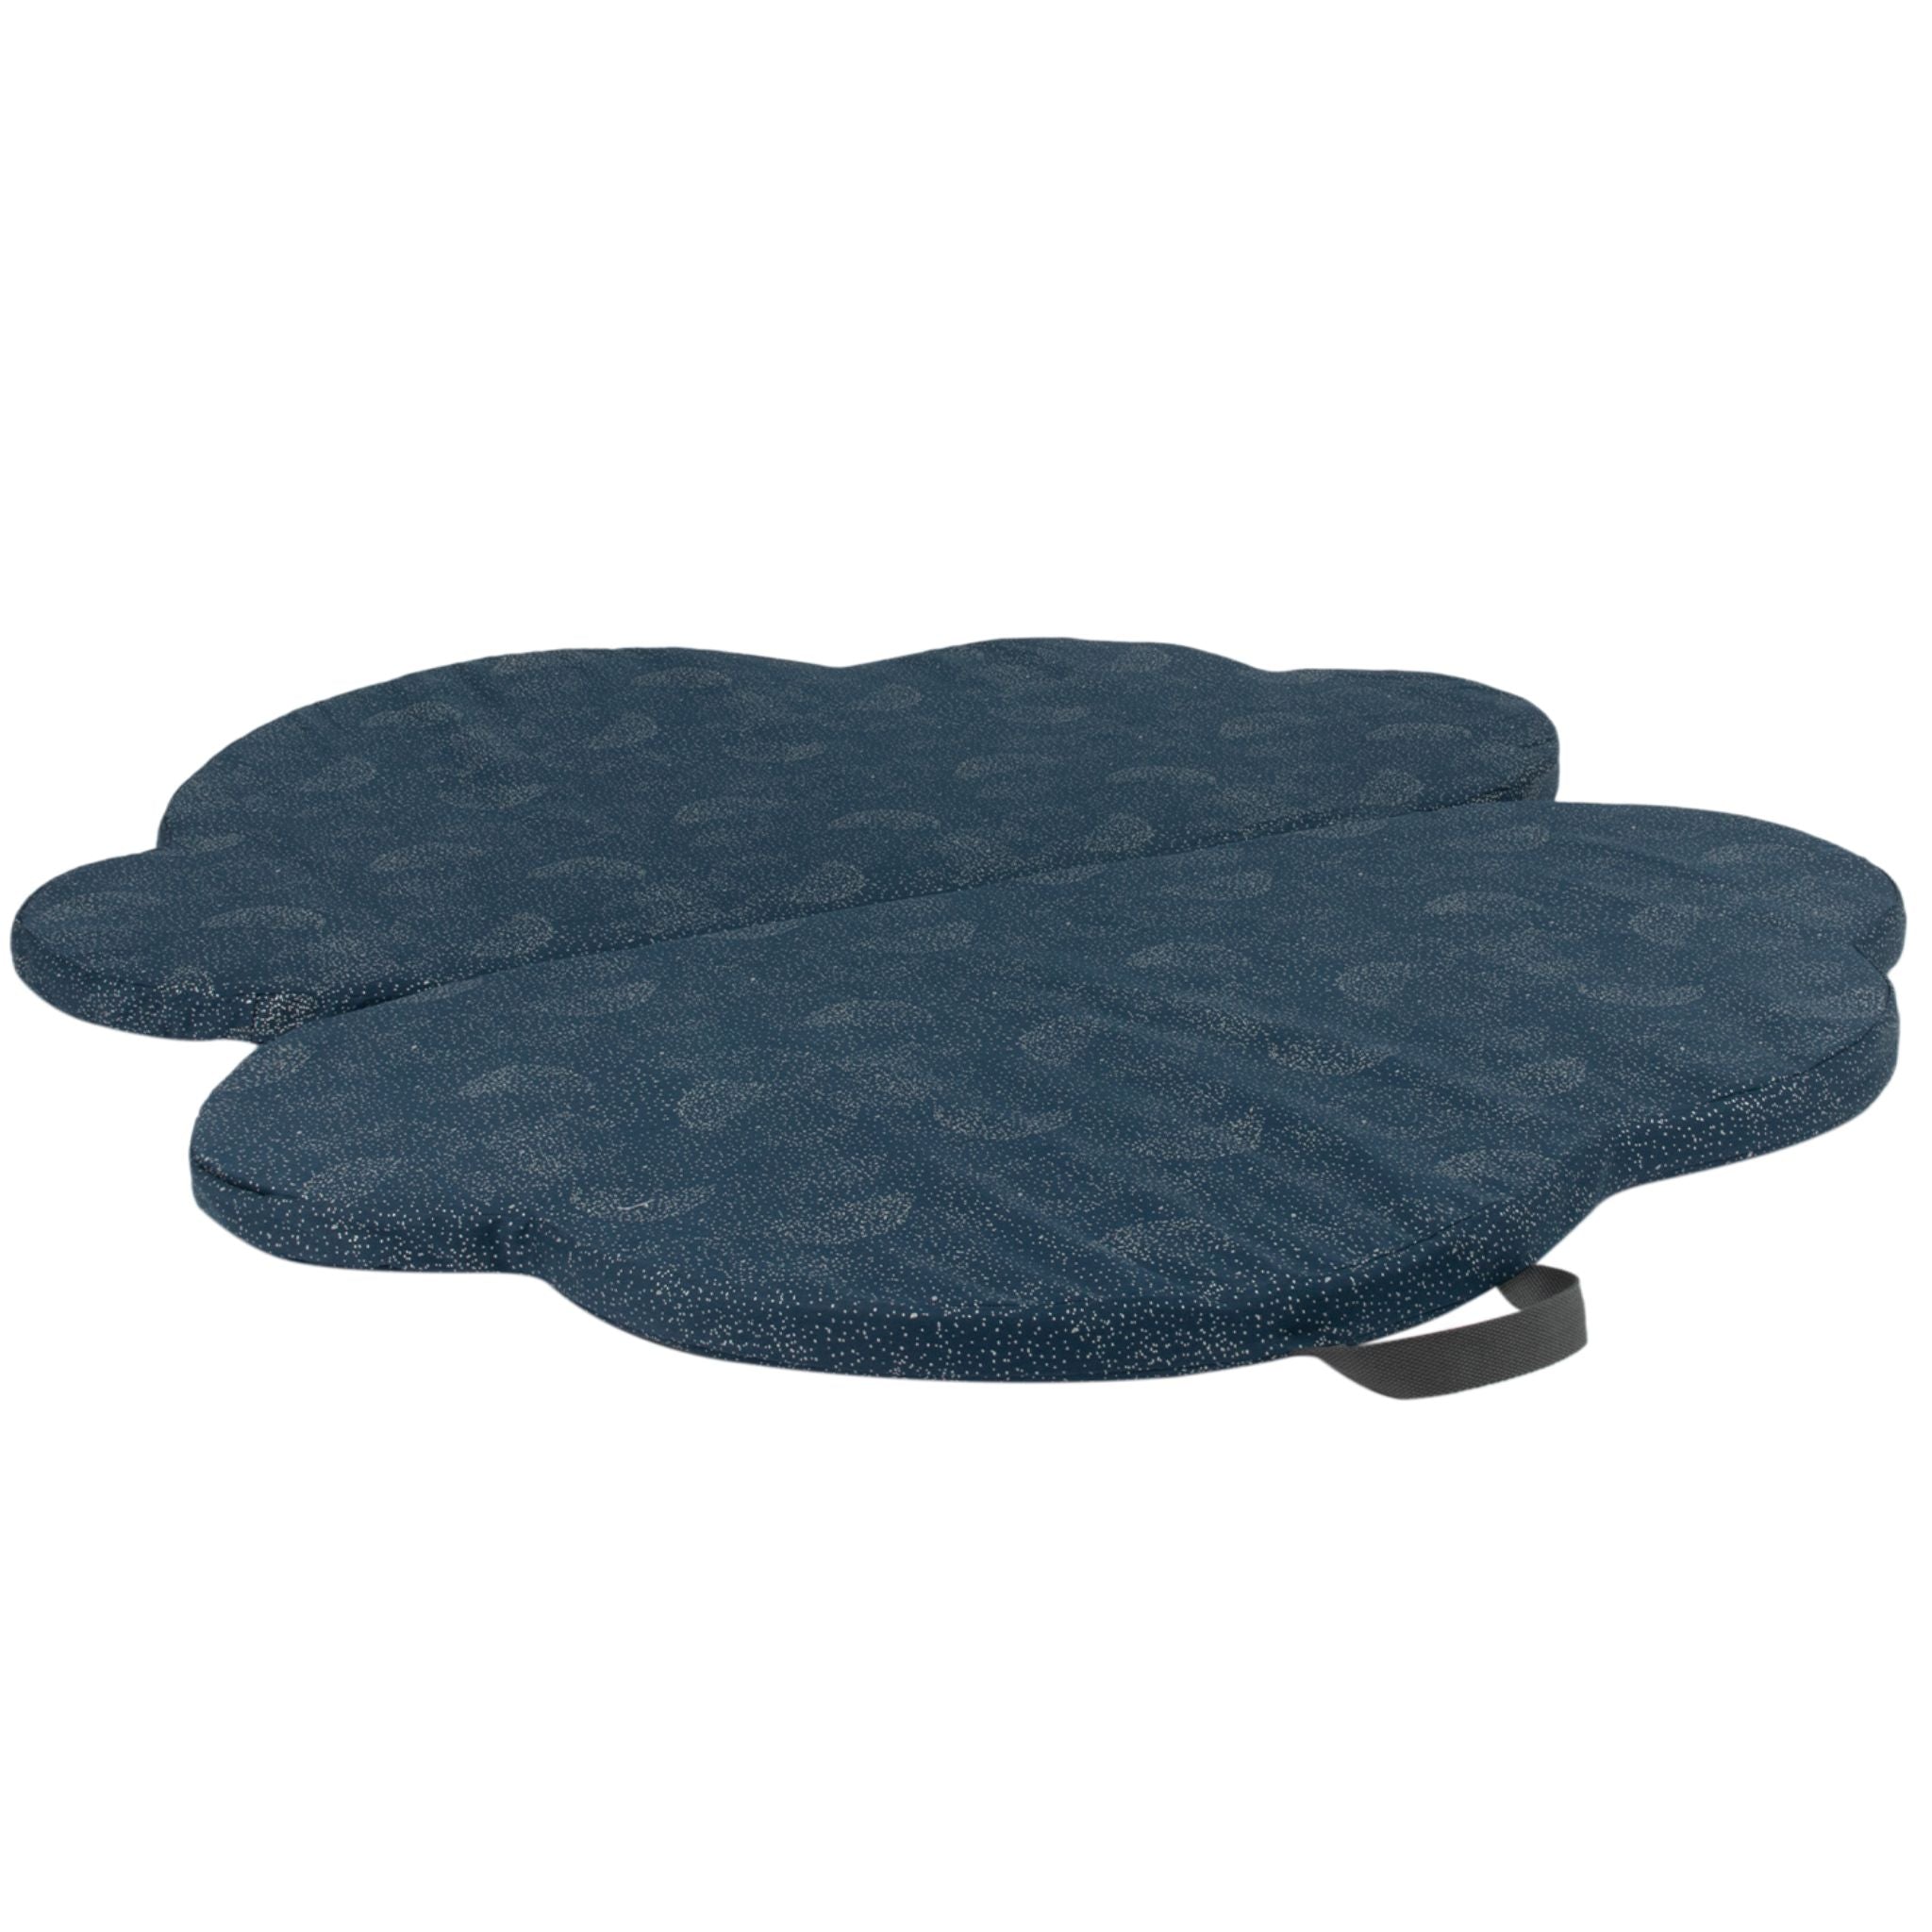 Nobodinoz Cloud Foldable Eco Floor Mat - Gold Bubble/ Night Blue Fully Open Flat